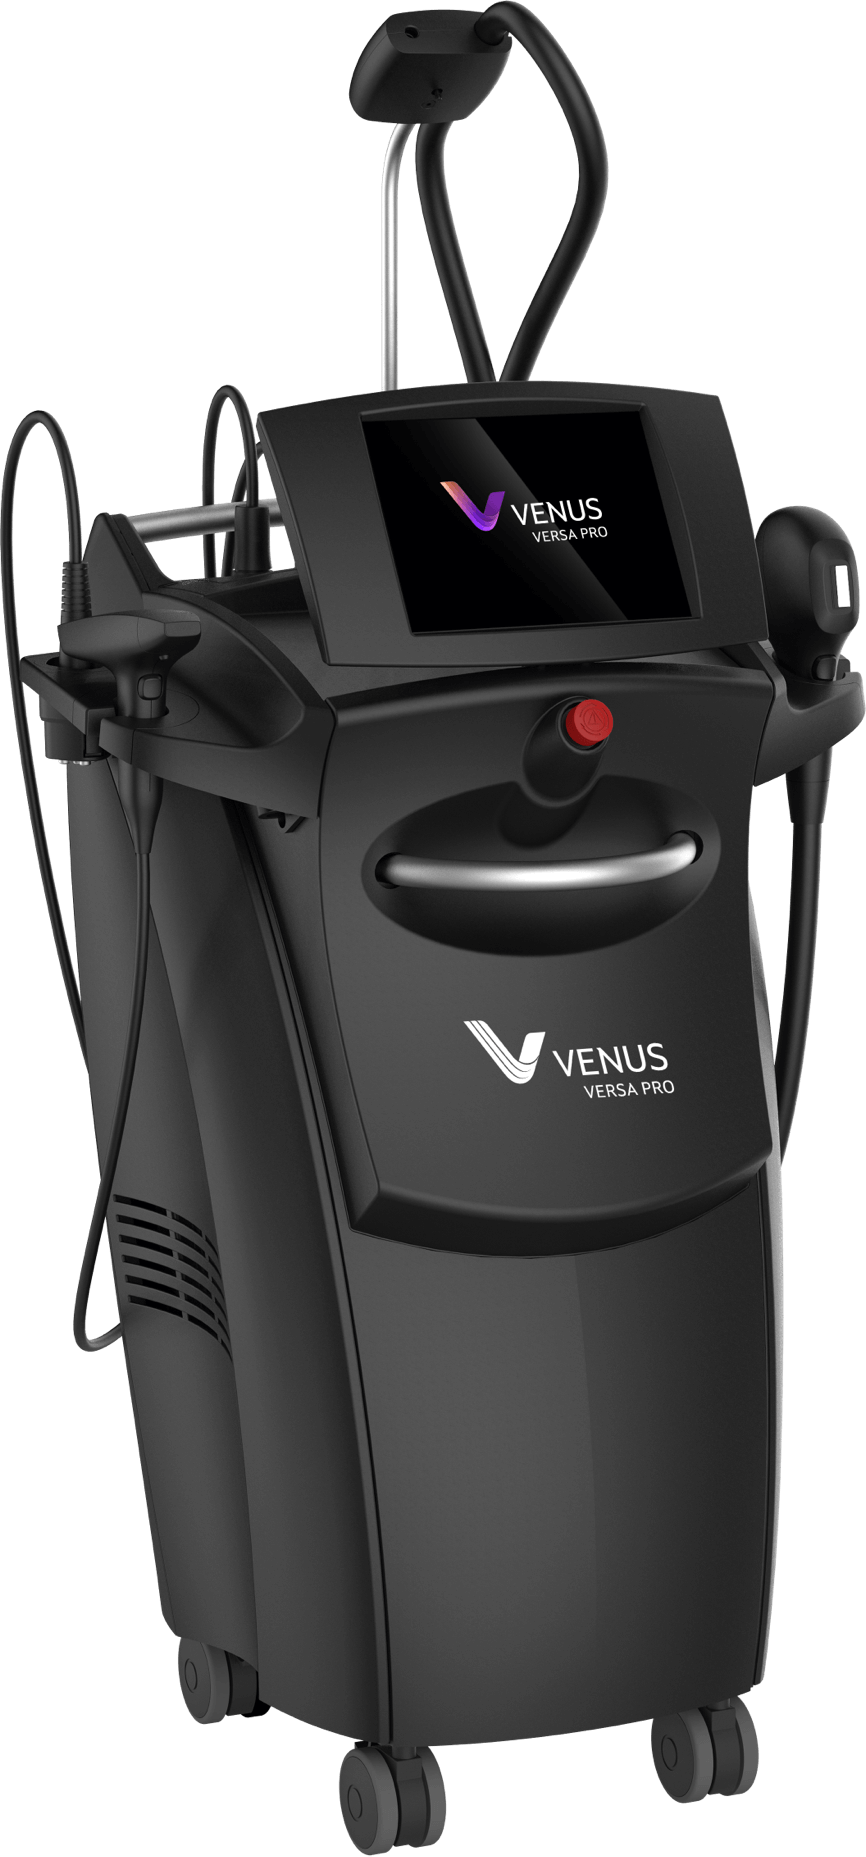 Venus Versa ™ related device